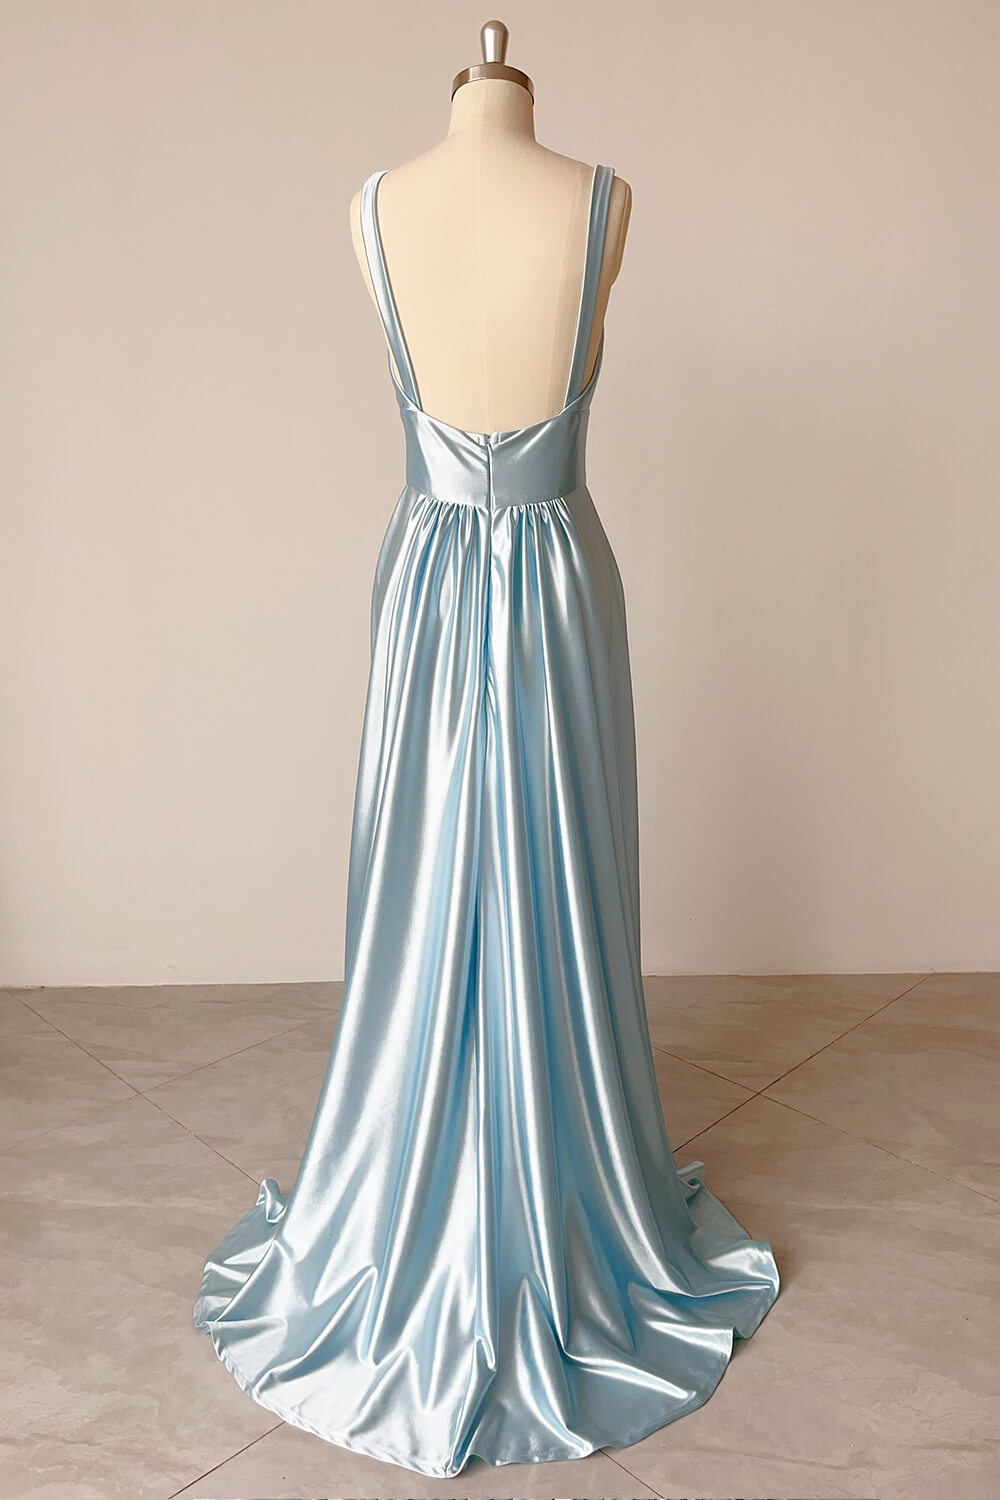 Hebochic V Neck Light Blue Satin Slit Long Gown Prom Dress Evening Dress